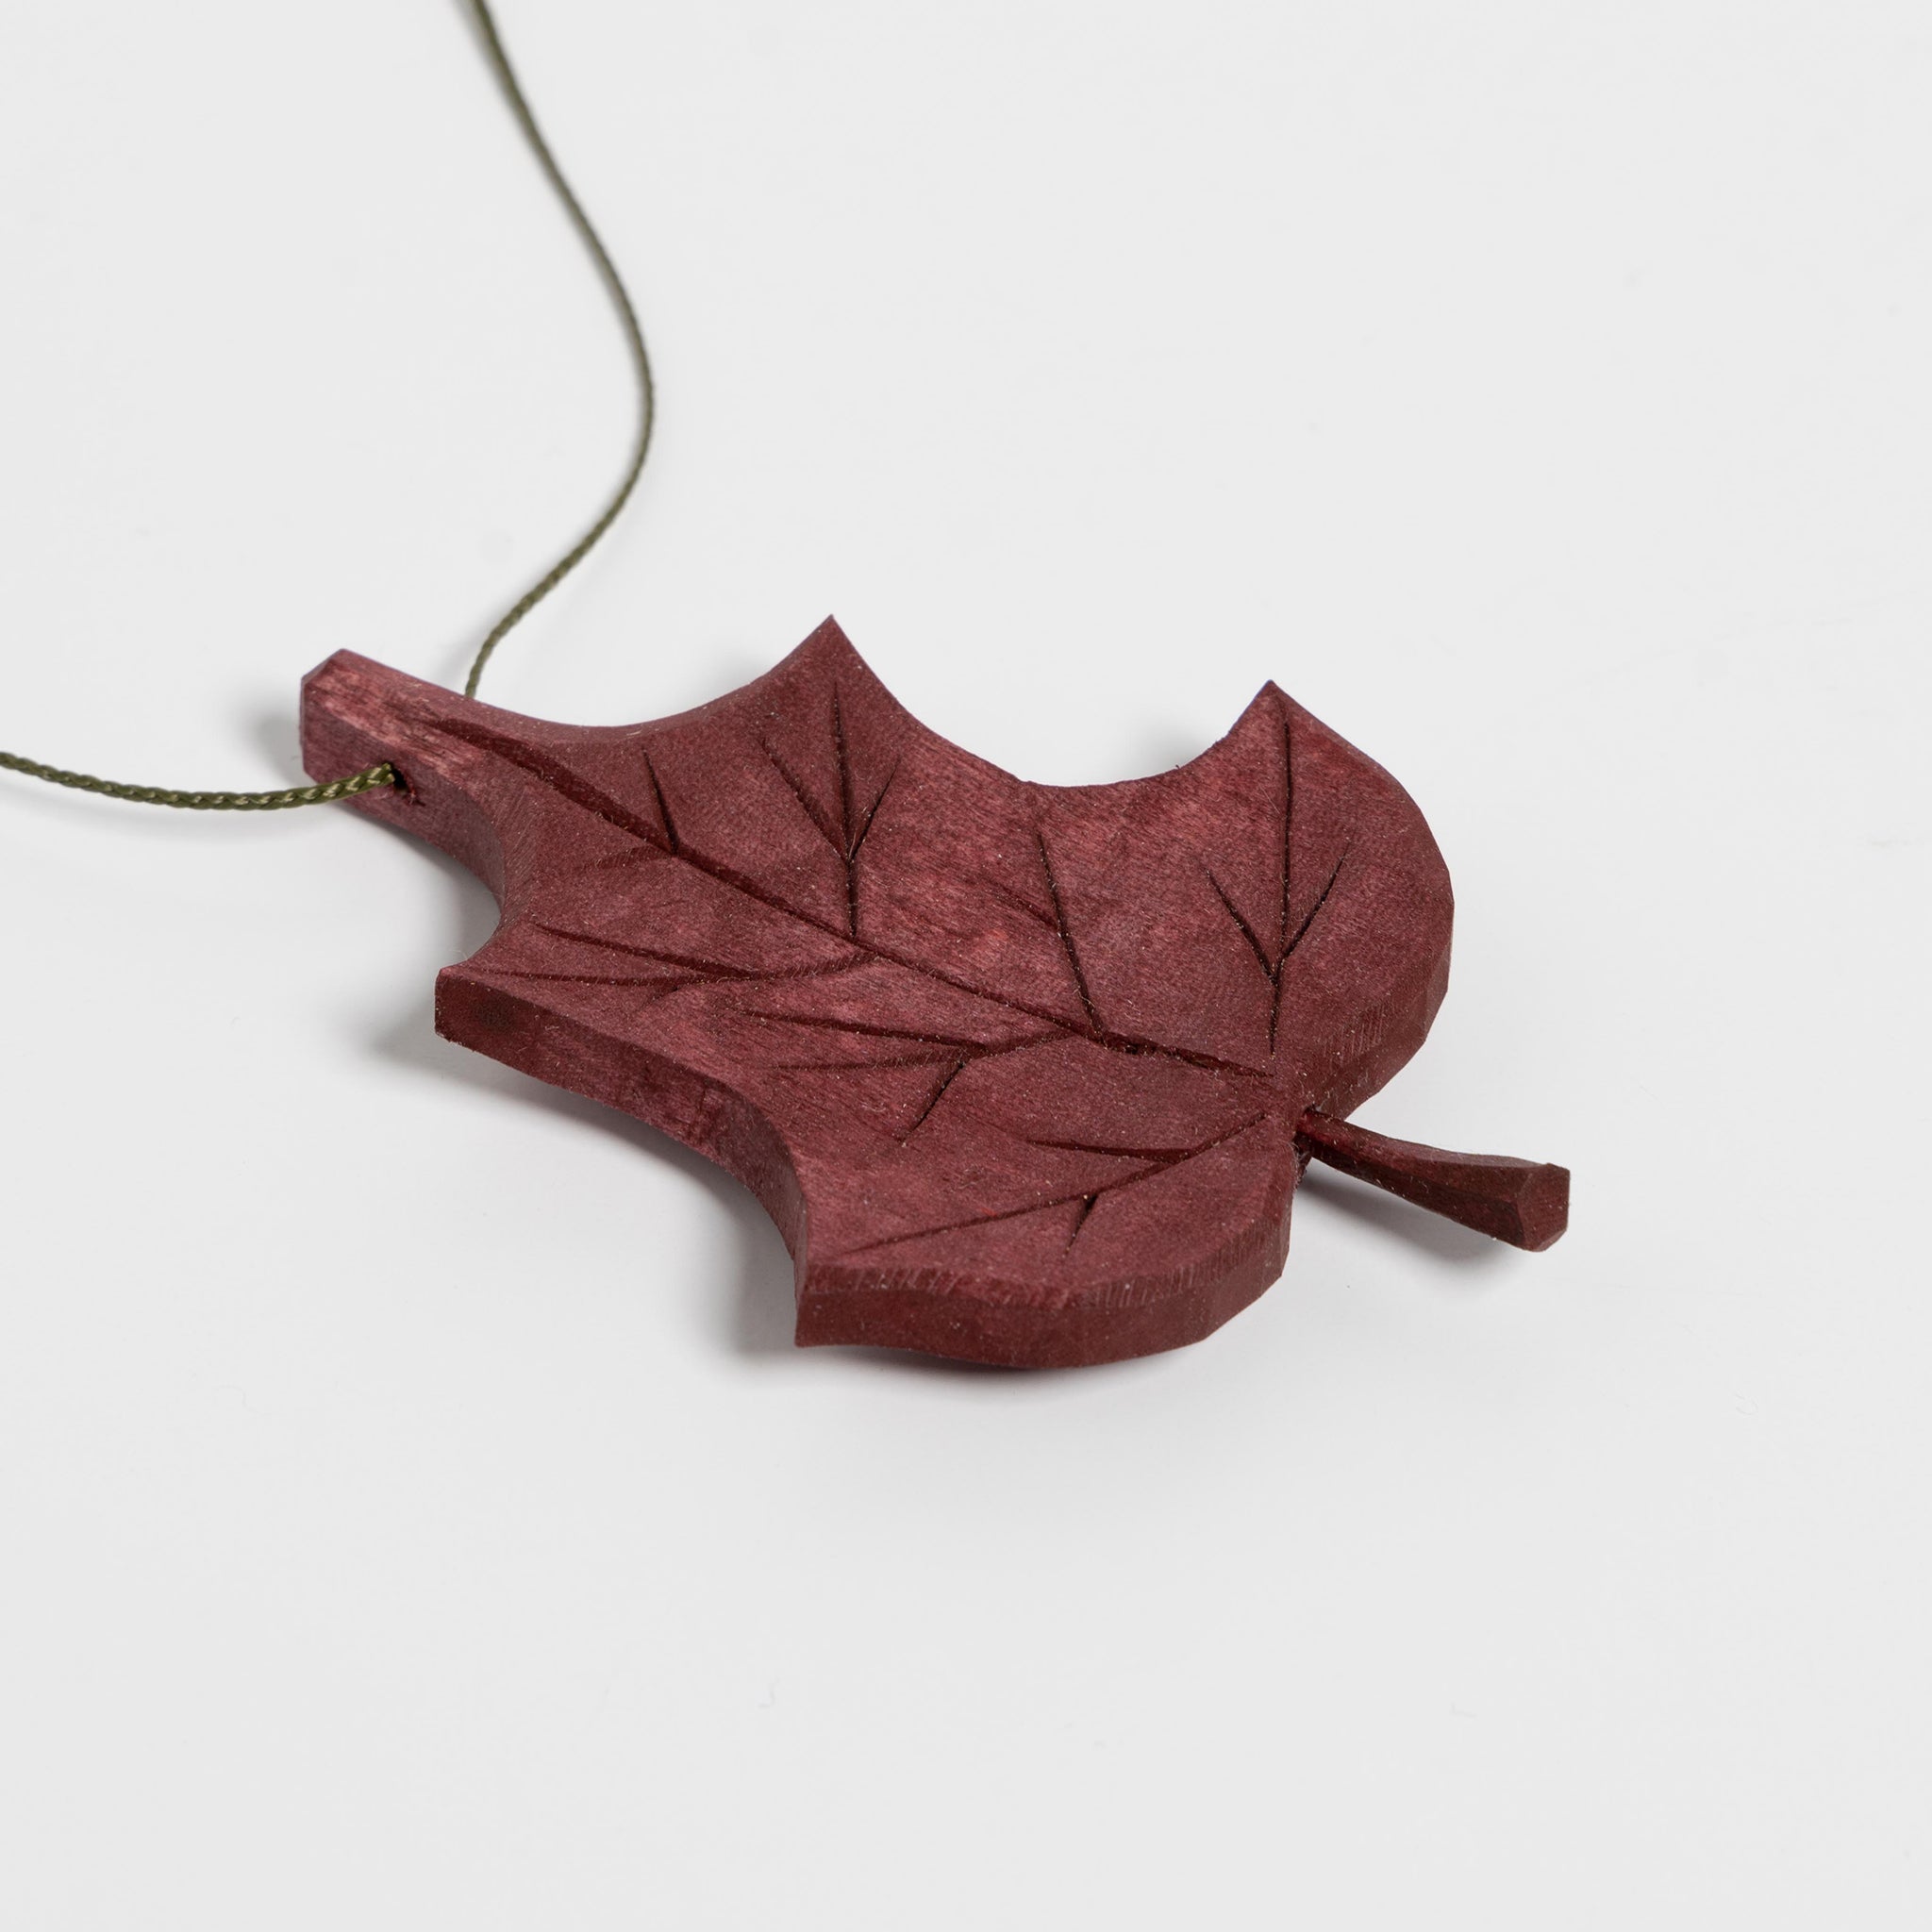 Leaf Necklace by Harley Refsal